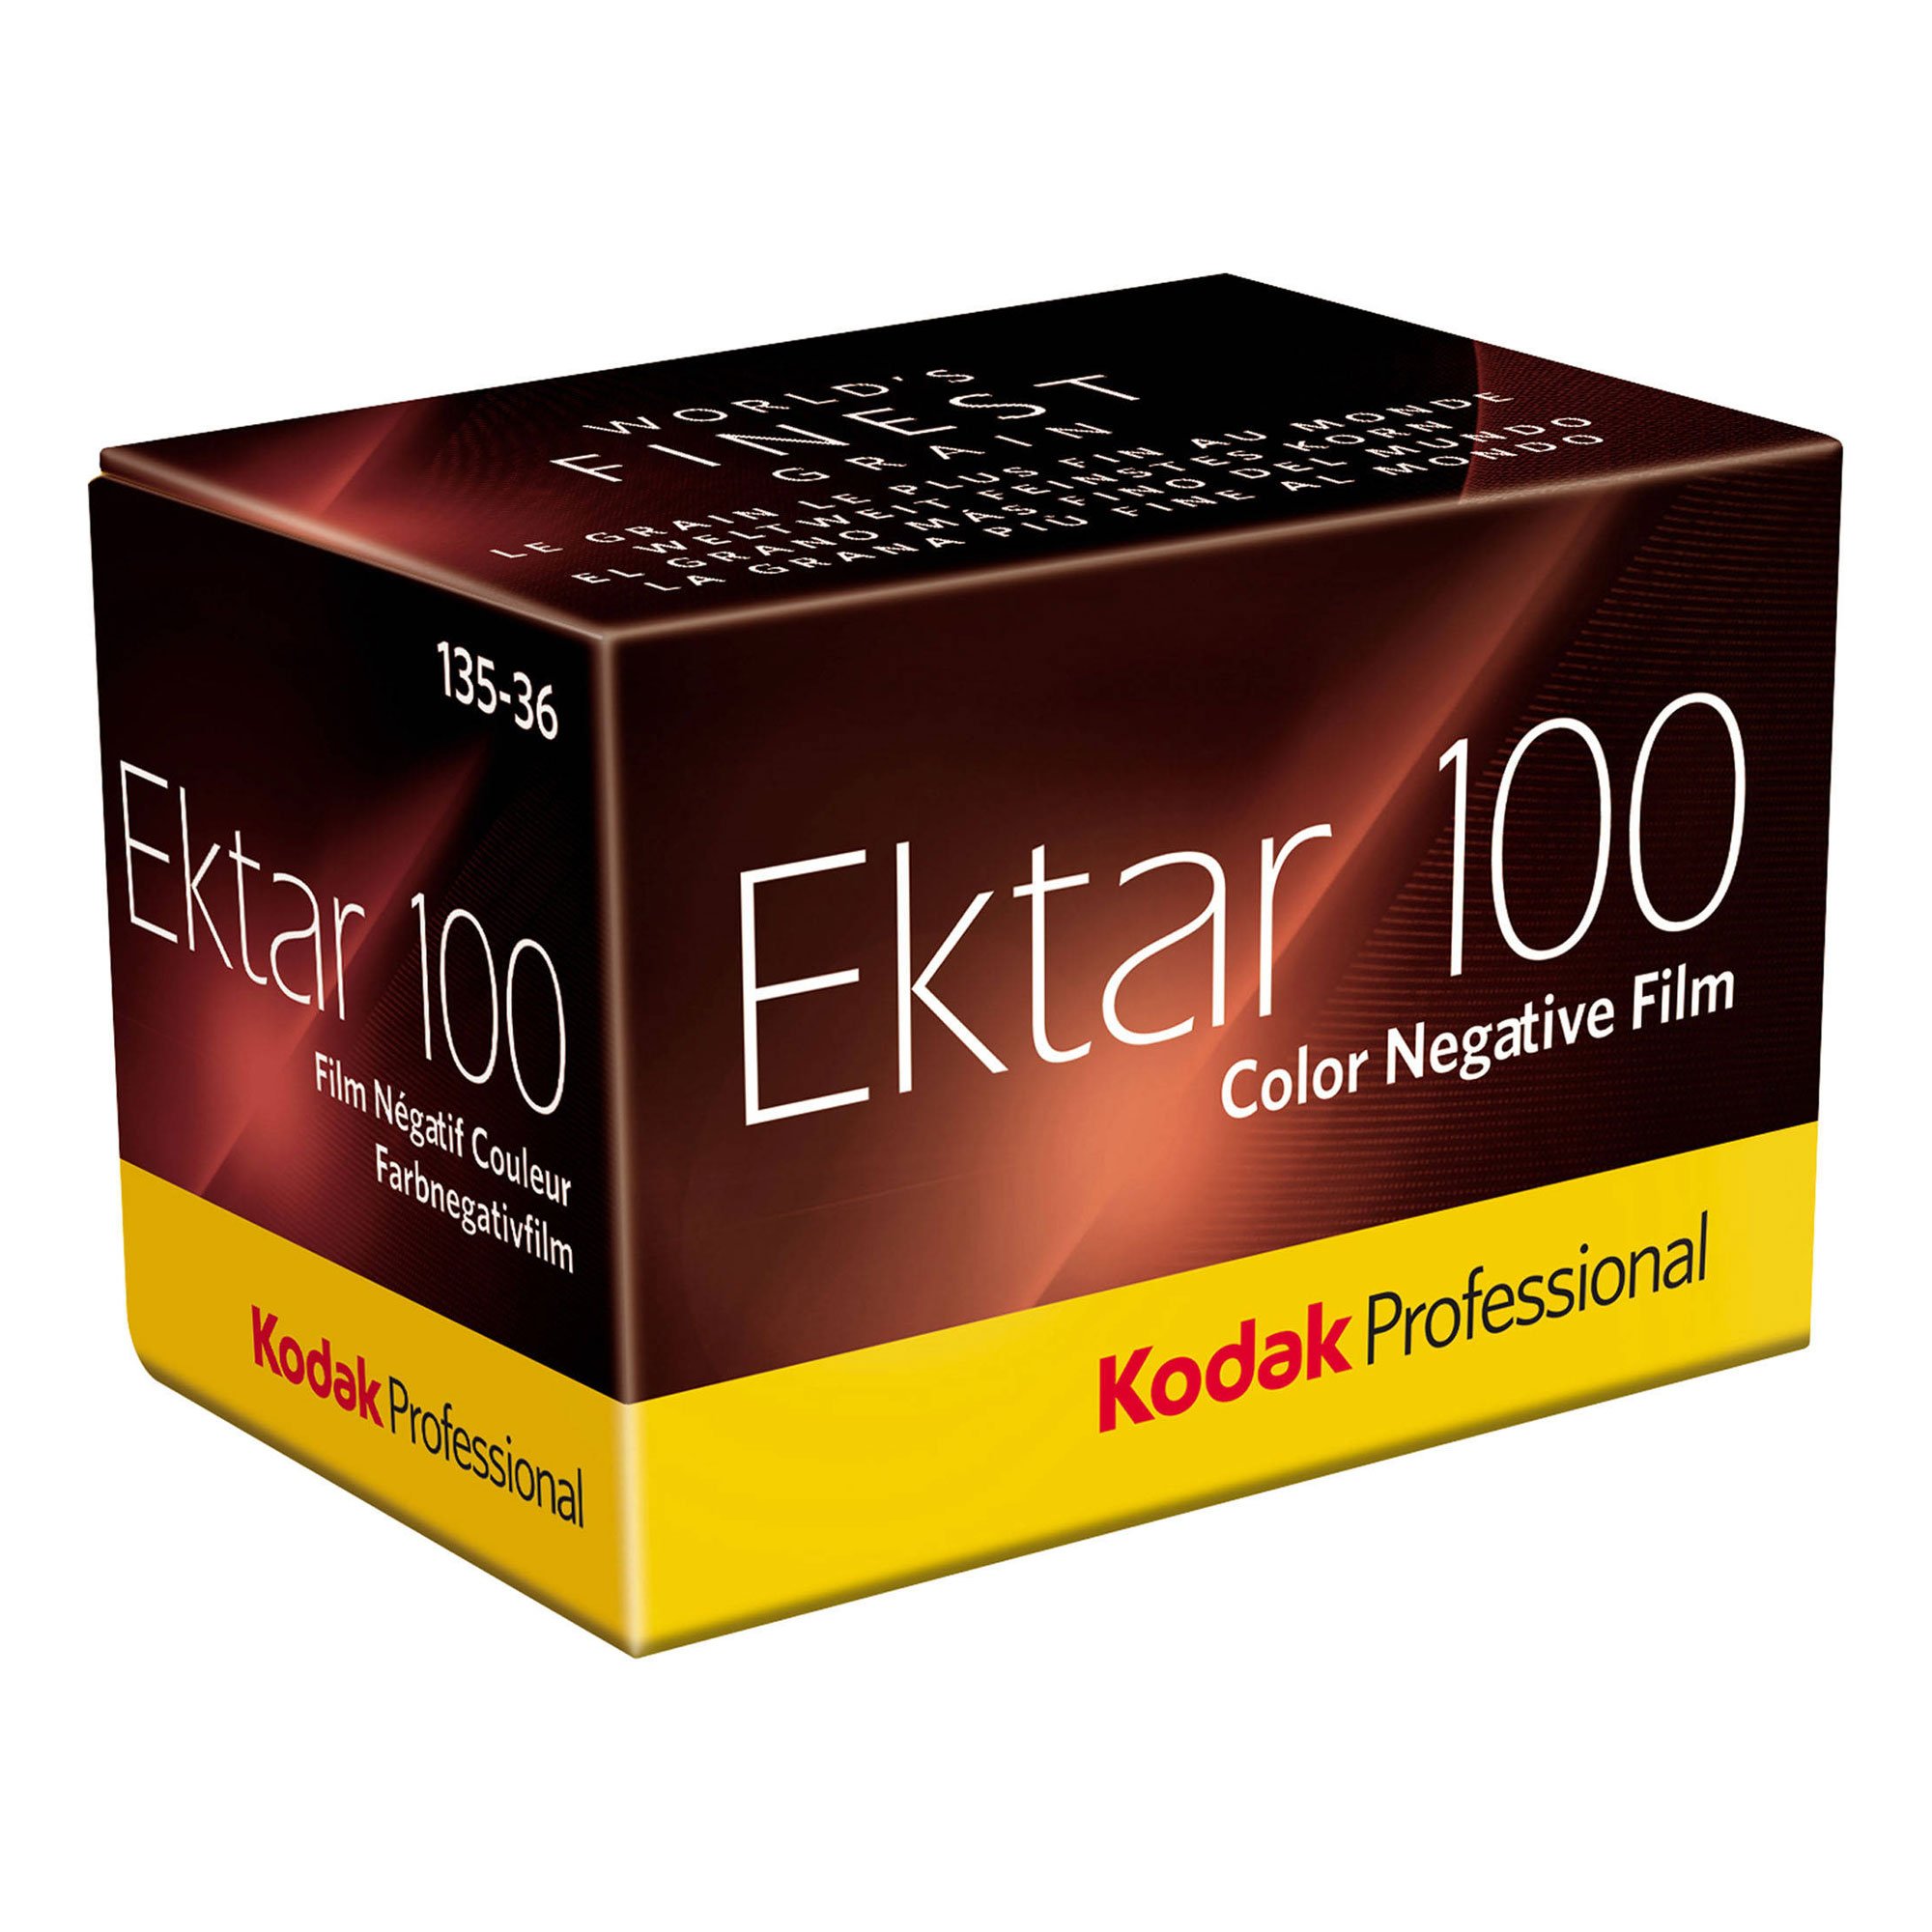 KODAK EKTAR 100 EXPIRED 01/1993 24EXP 35mm FILM 1 ROLL ONLY COLLECTORS ITEM 